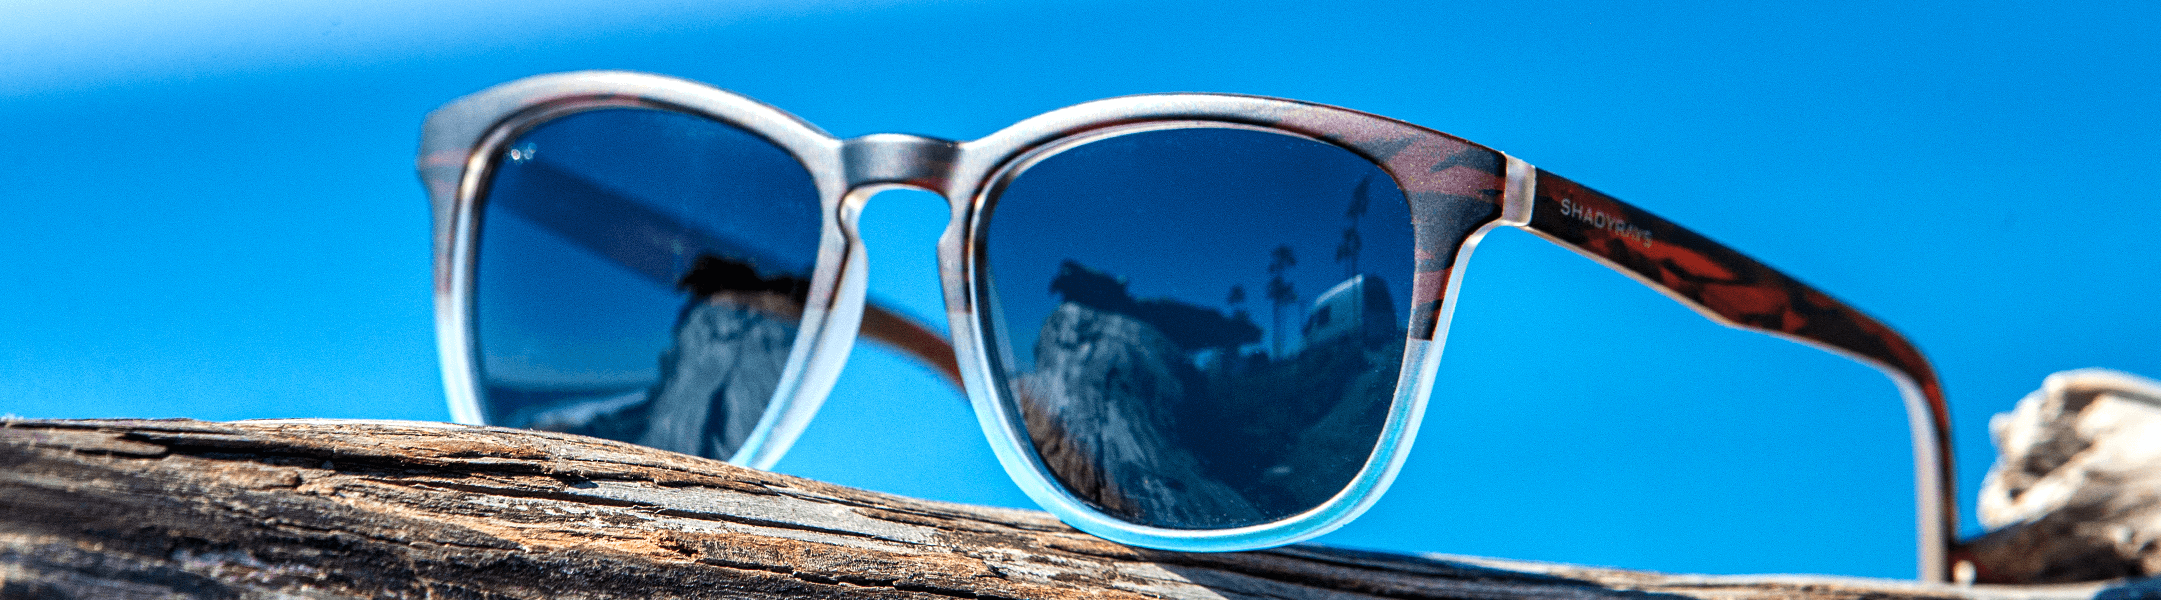 10pcs/Set Wear Glasses To Check Polarized Test Card Sunglasses Polarized  Eyewear Accessories Wholesale